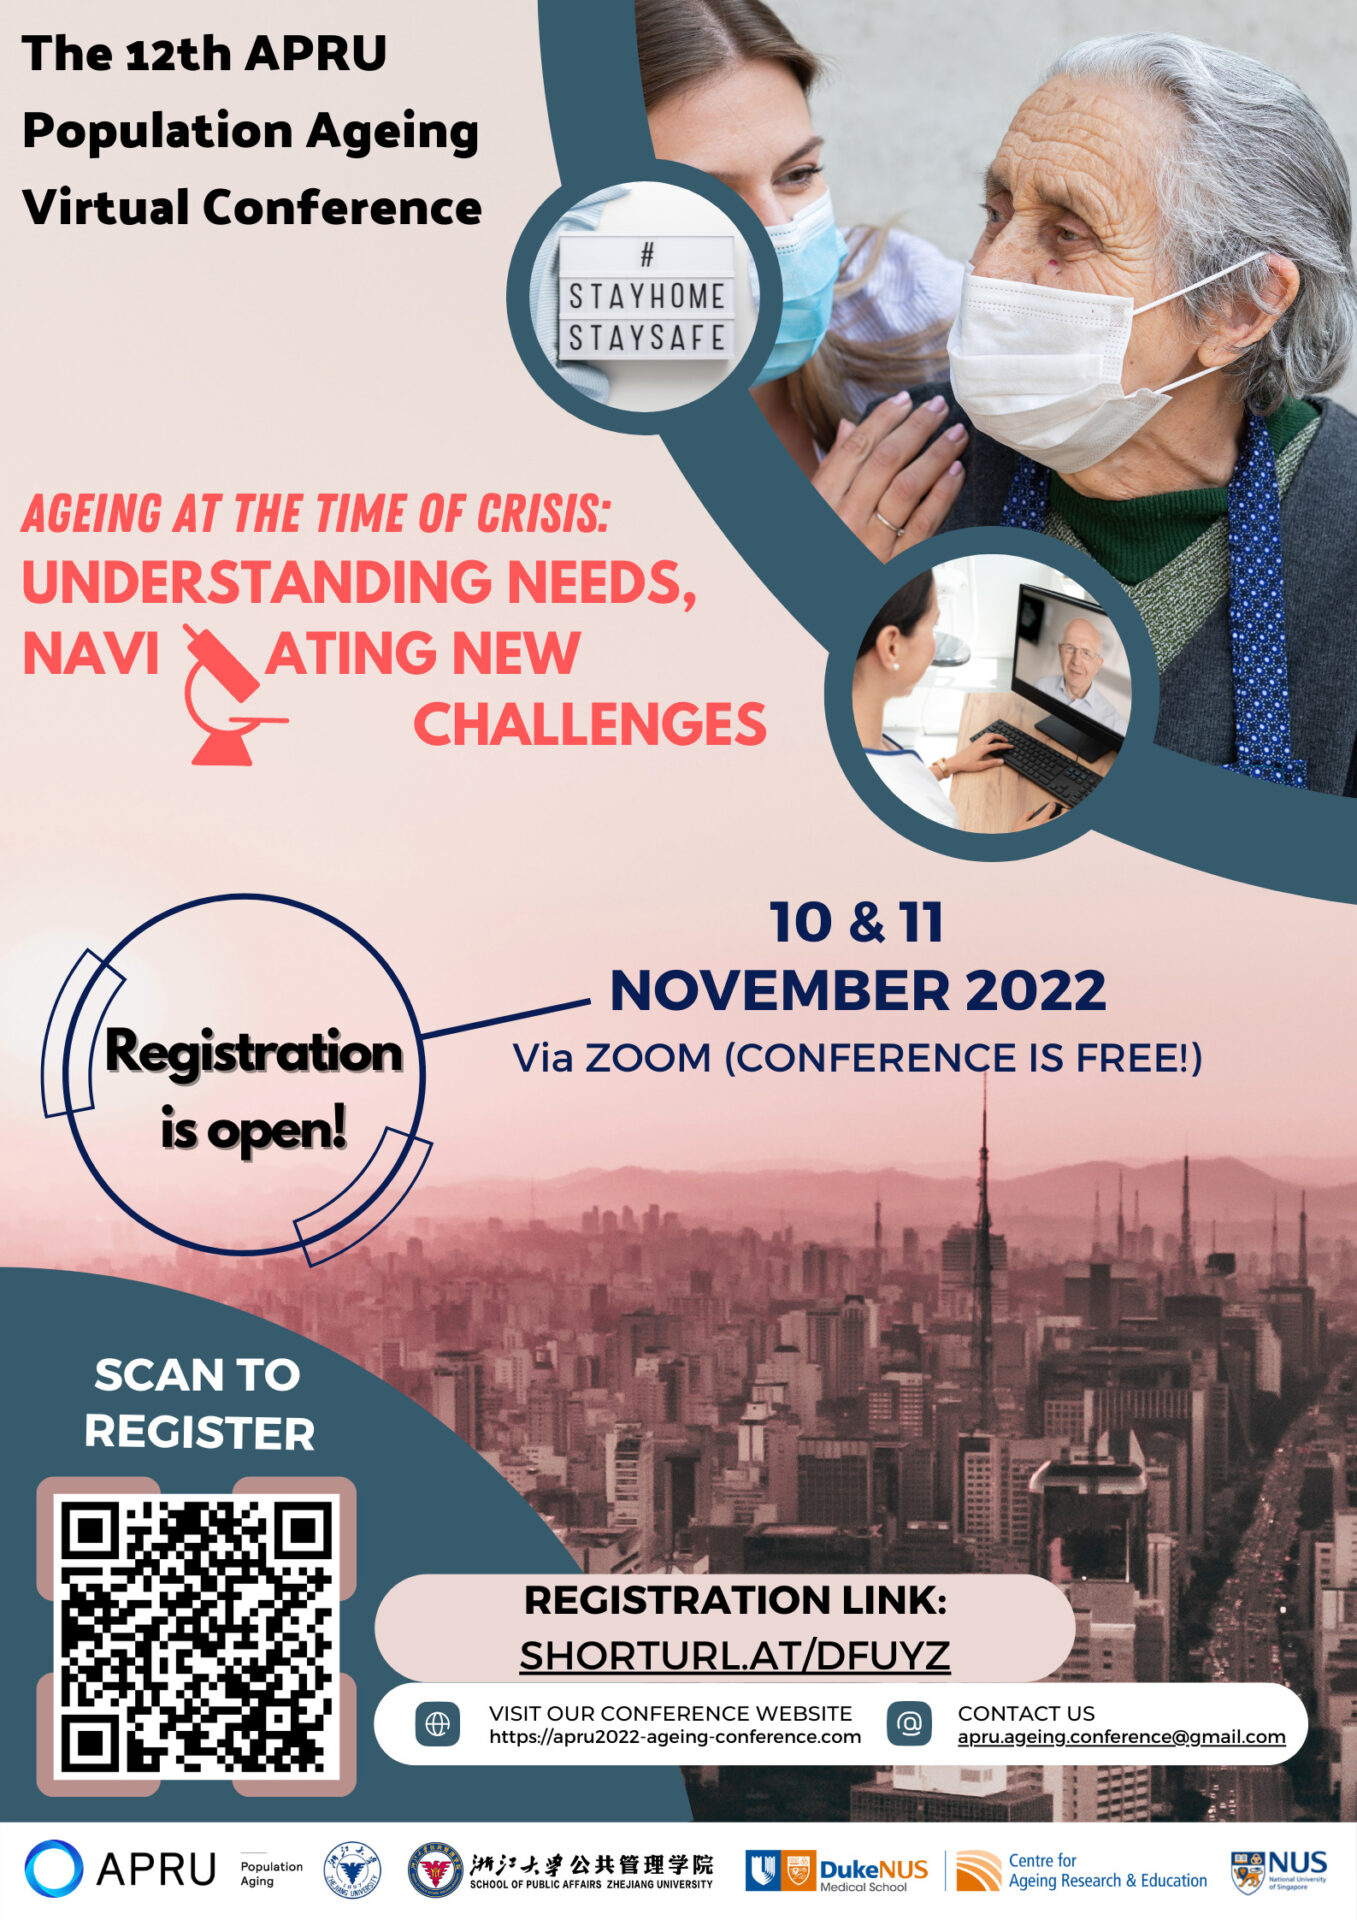 The 12th APRU Population Ageing Virtual Conference 2022 APRU